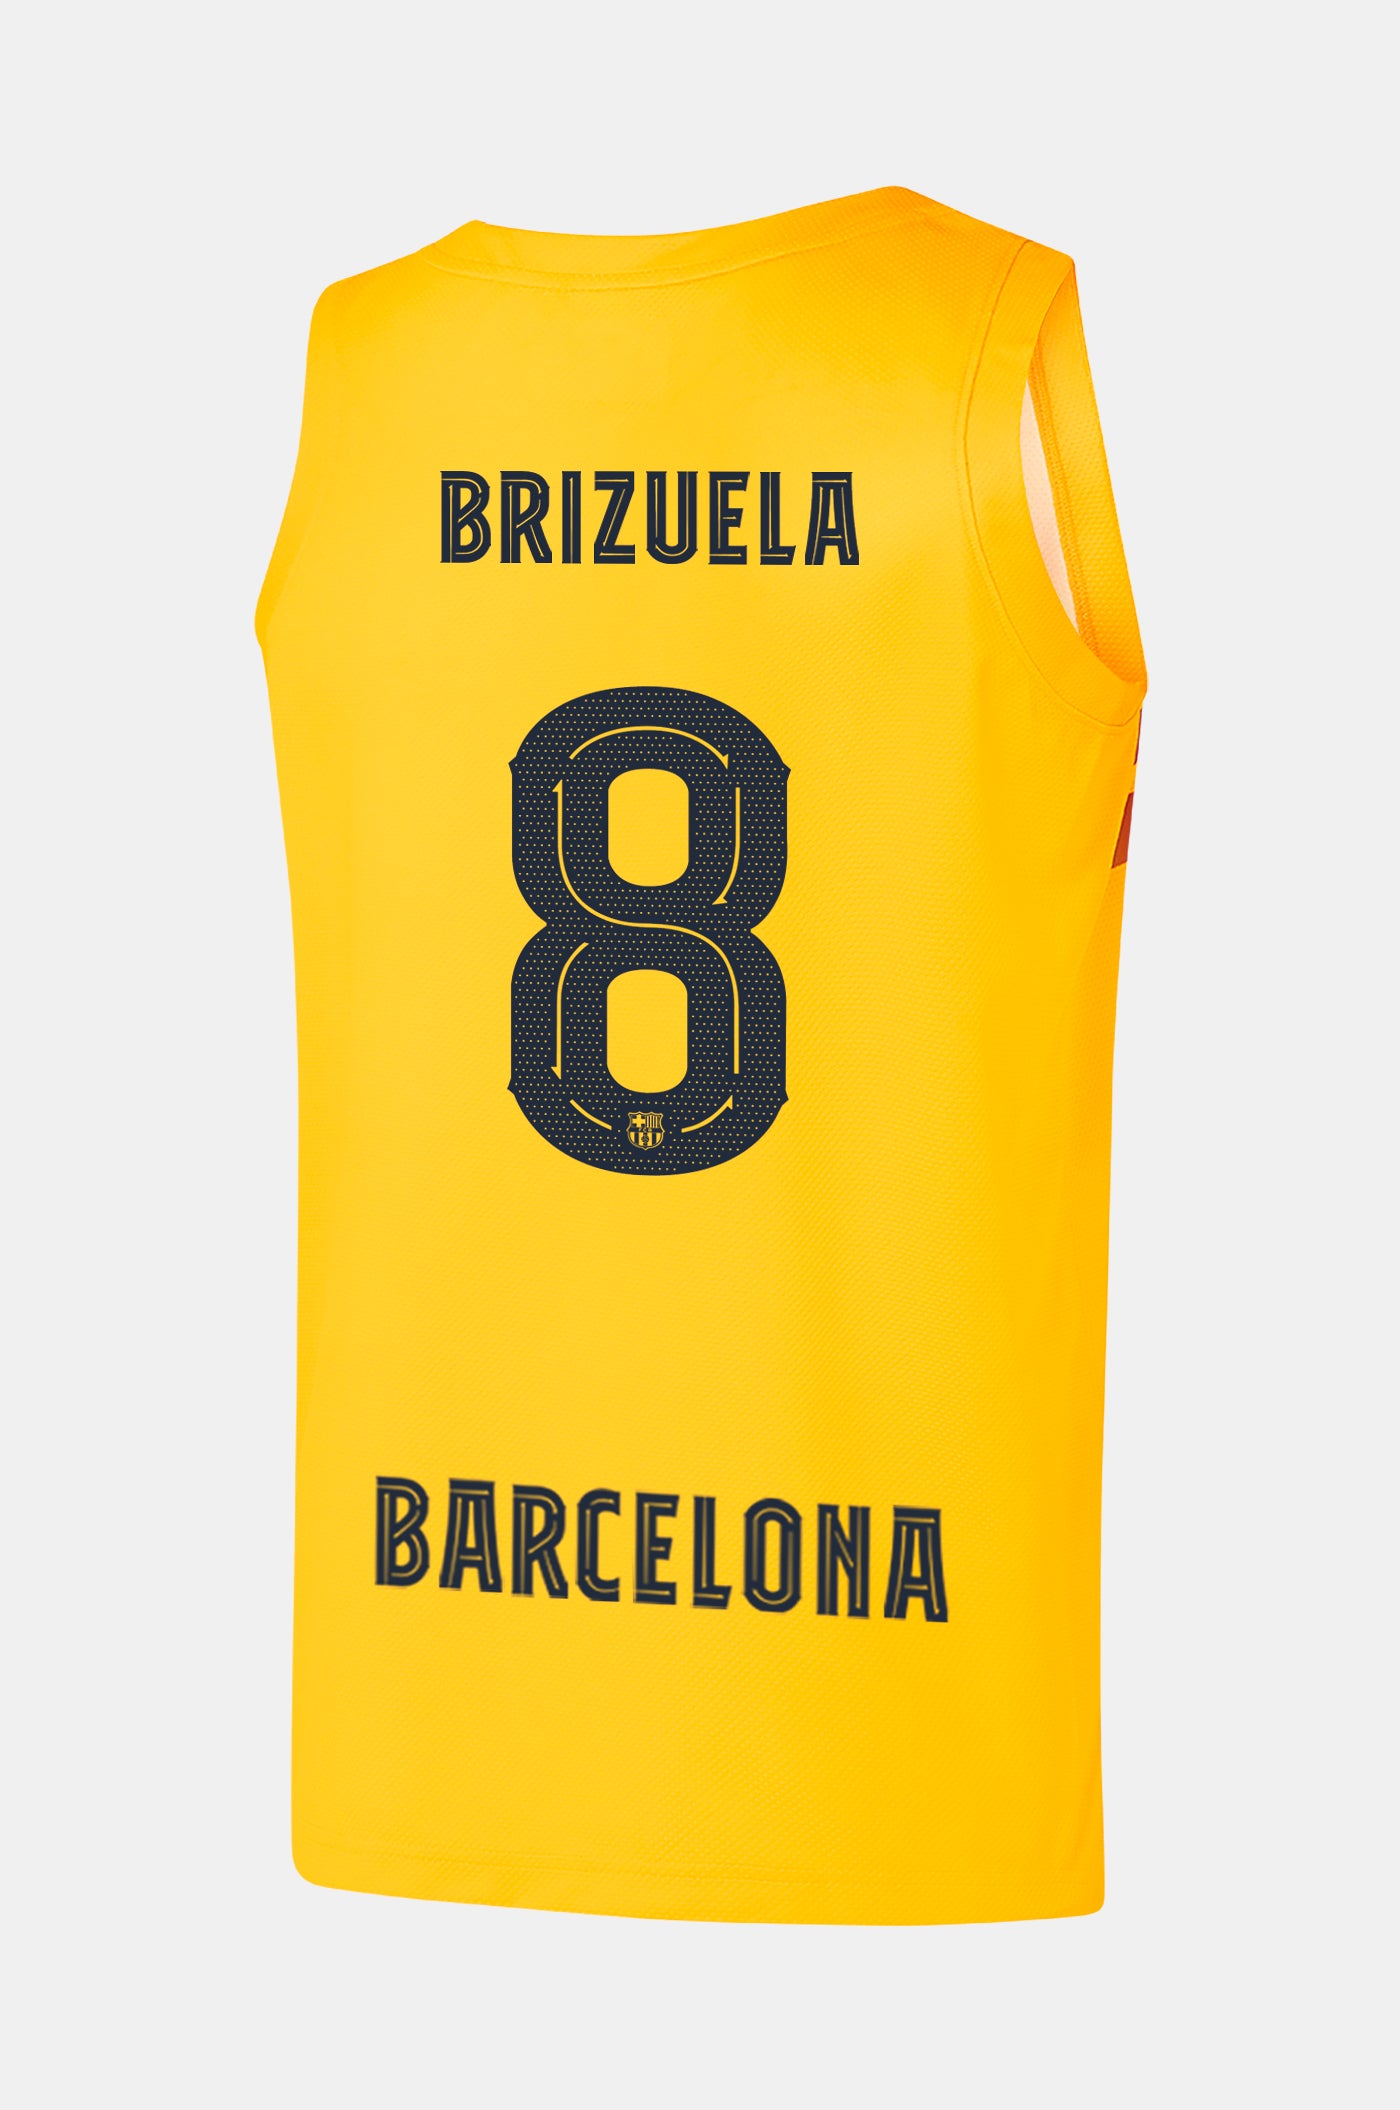 EUROLEAGUE - FC Barcelona Basketball Fourth kit Shirt  23/24 - BRIZUELA